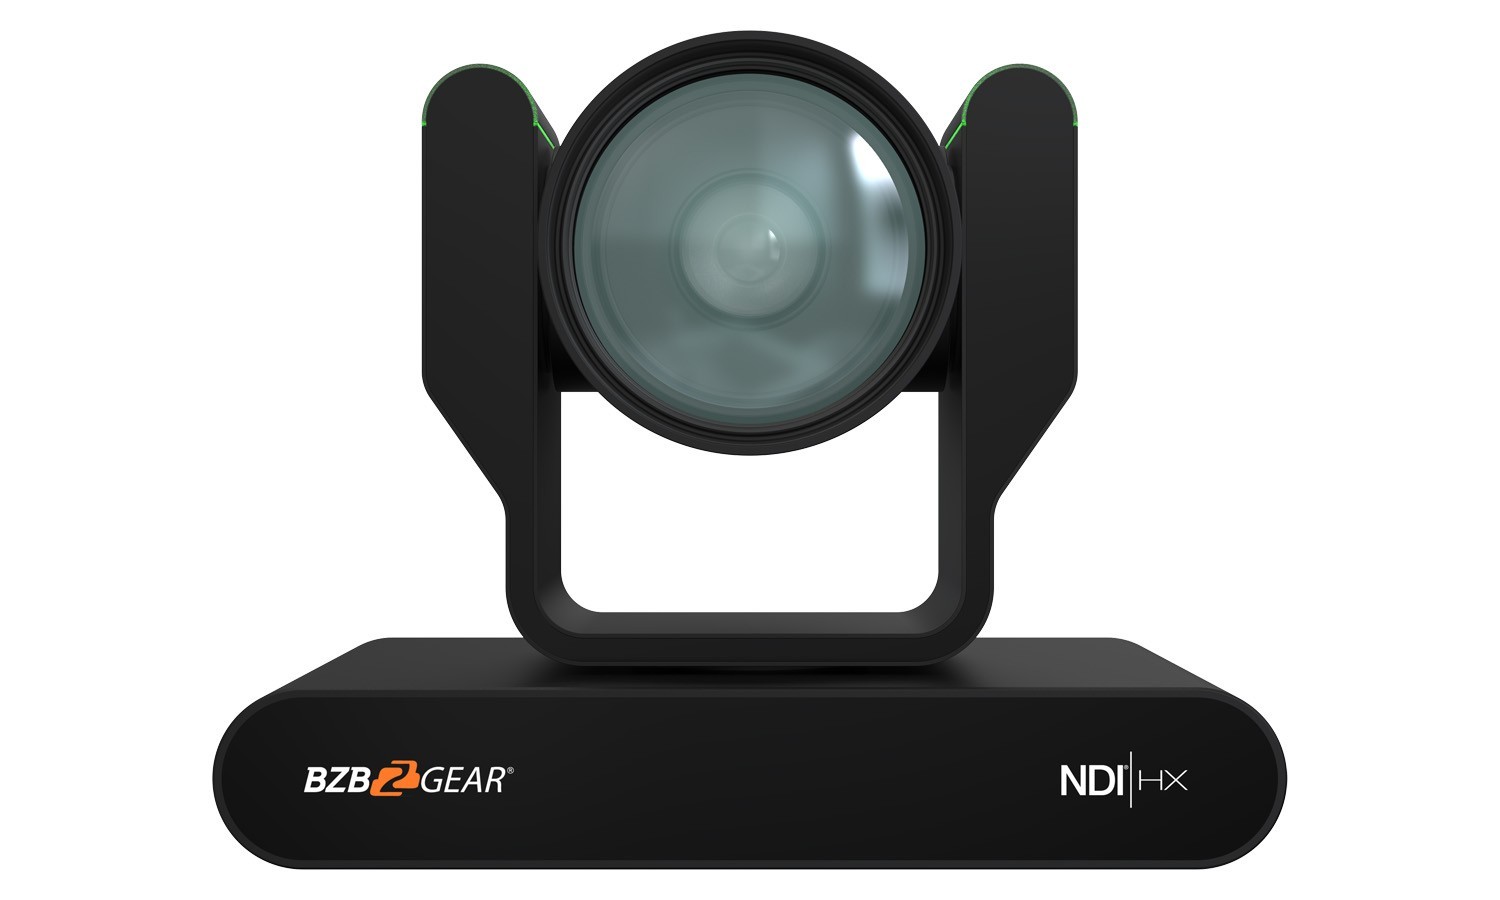 4K Auto Tracking NDI Live Streaming PTZ Camera with Tally Lights